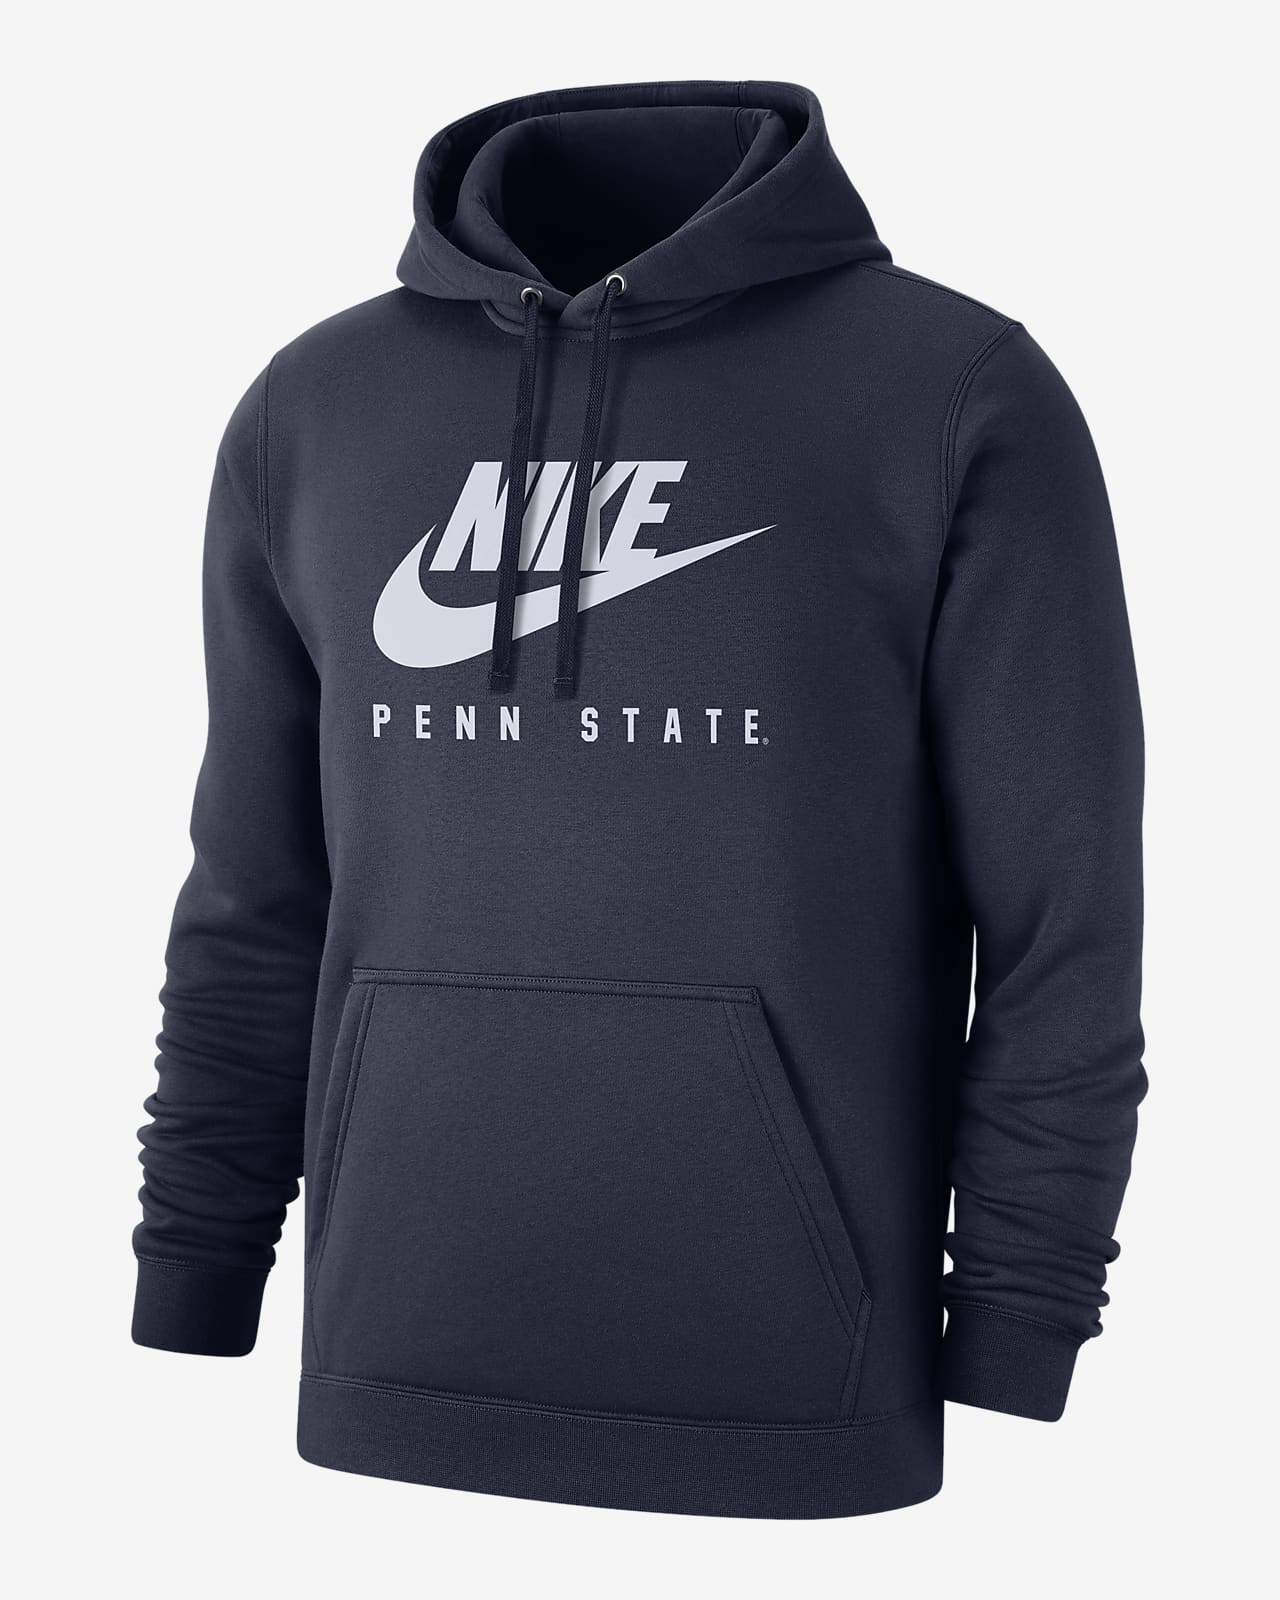 Sudadera con capucha sin cierre para hombre College Club (Penn State). Nike.com